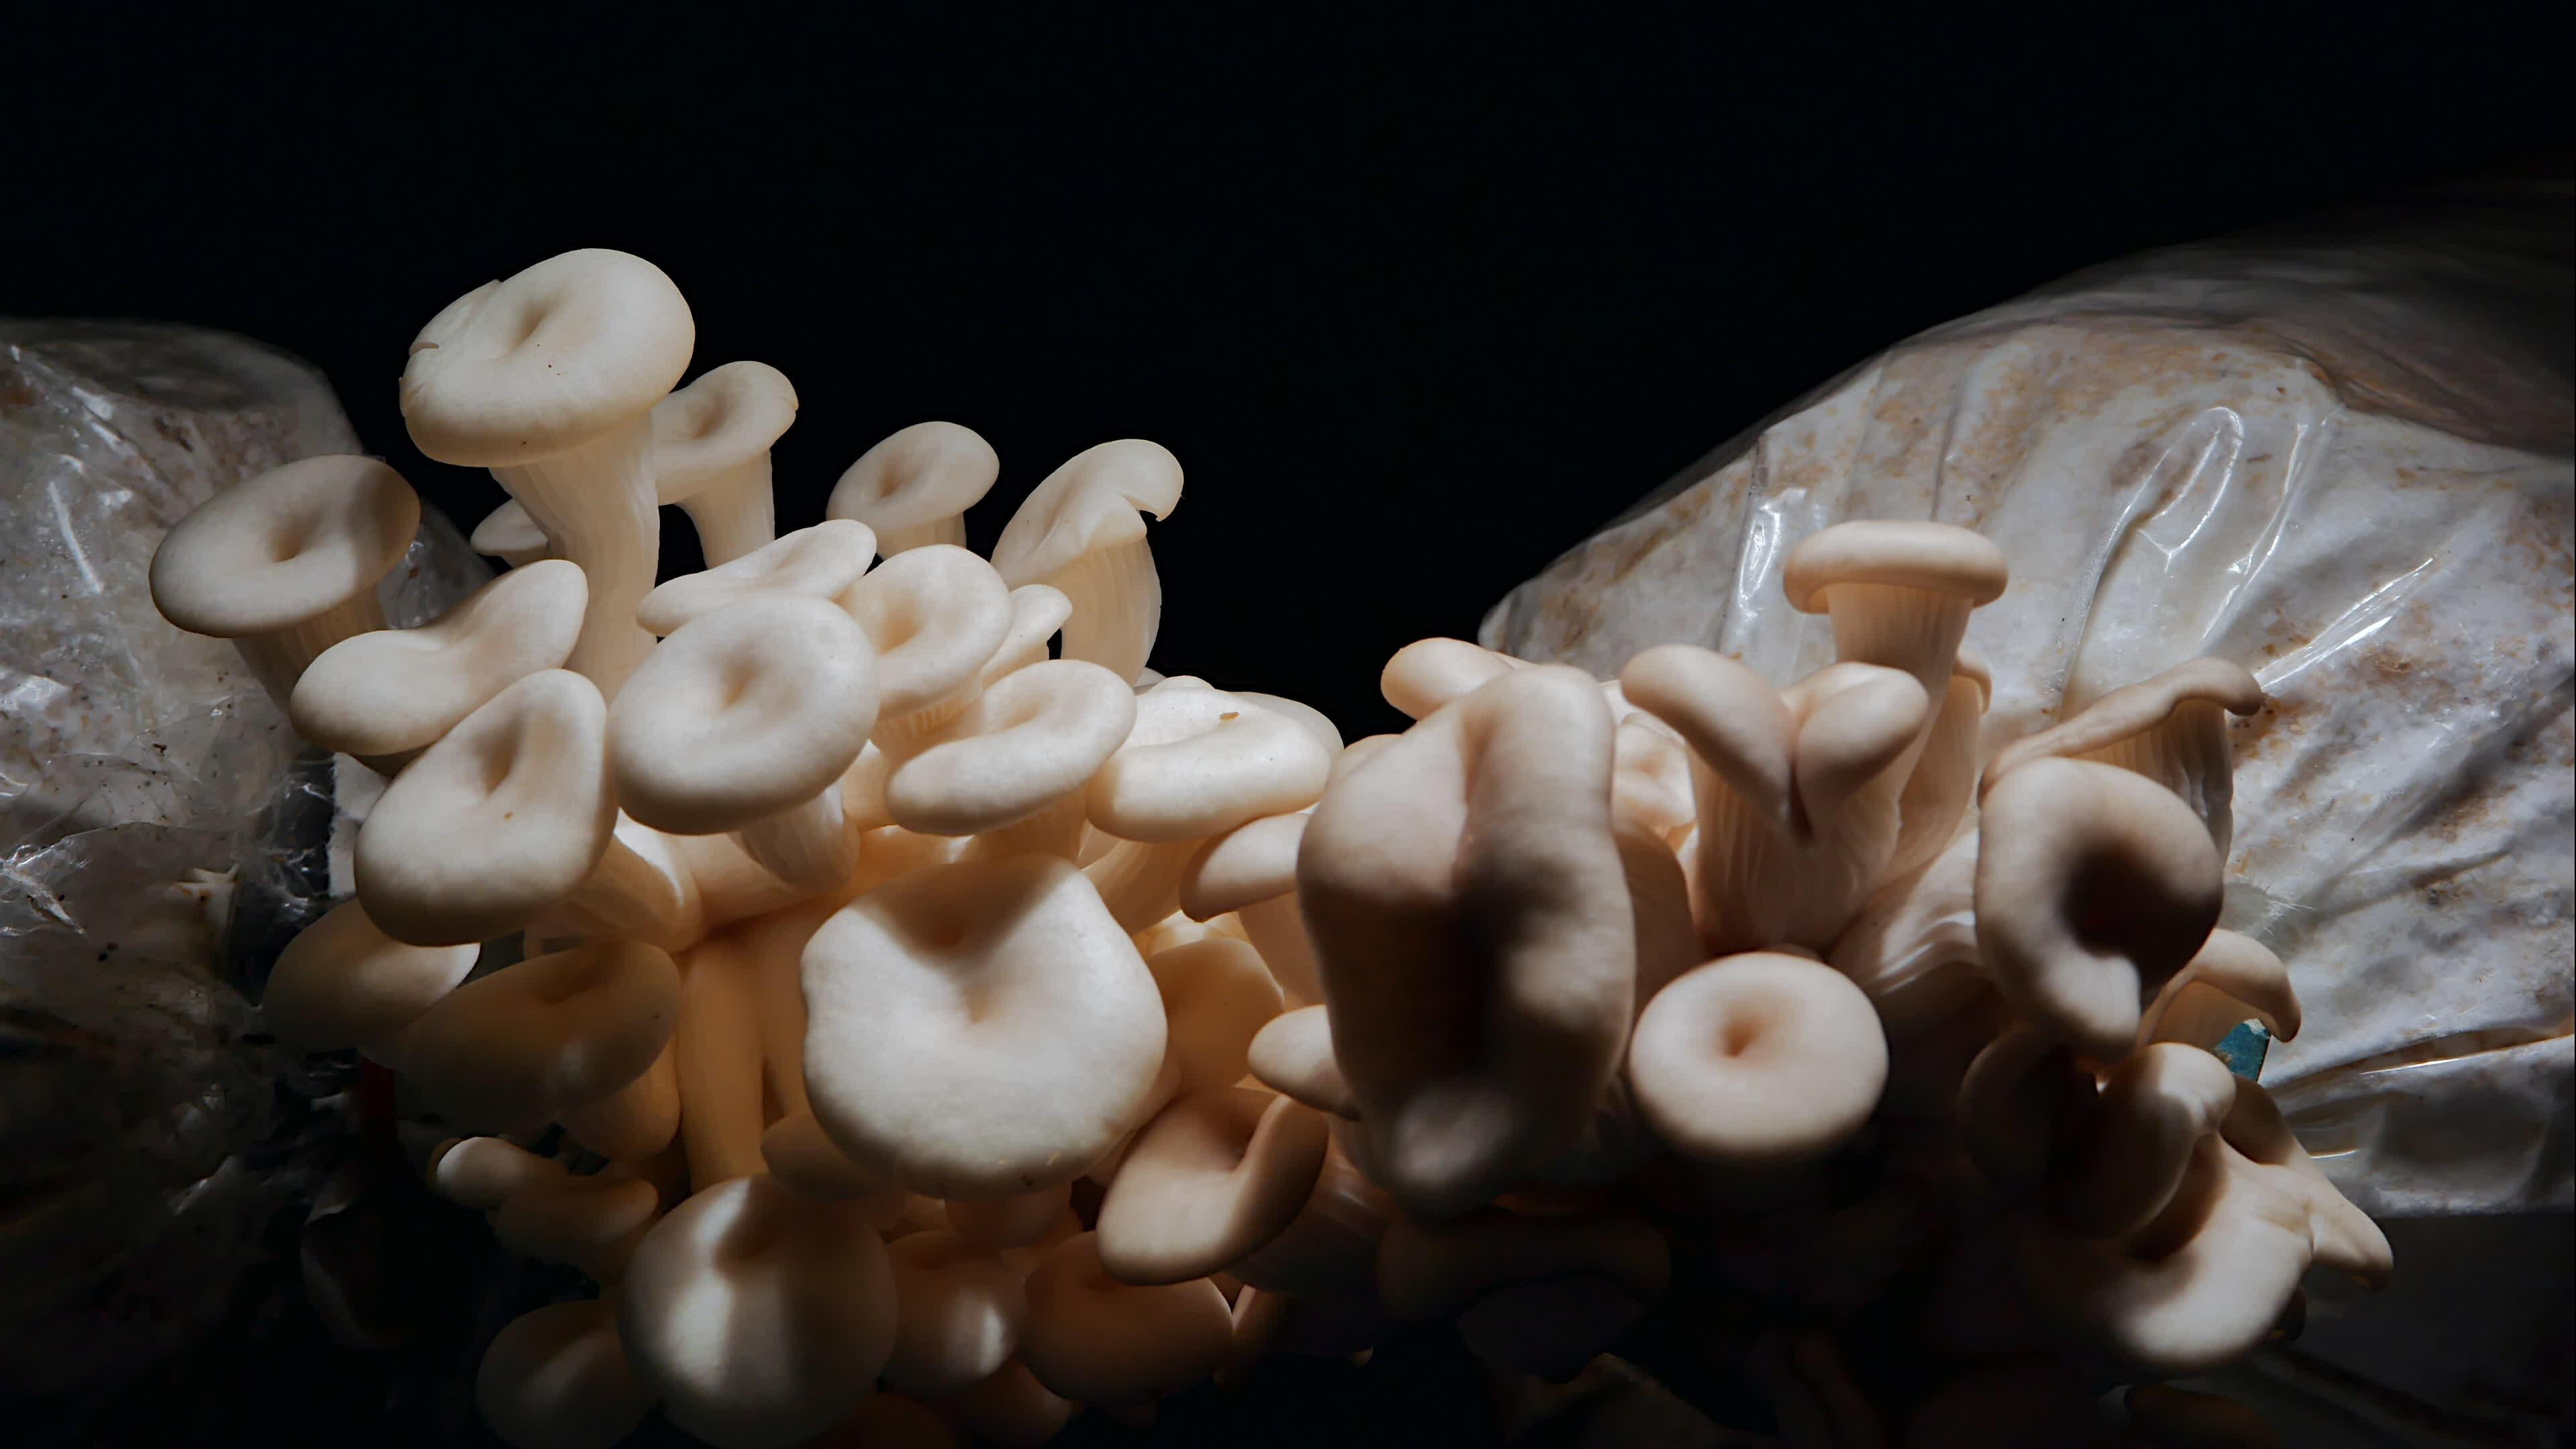 Oyster mushrooms, Free download, Stock video footage, Edible fungi, 3840x2160 4K Desktop